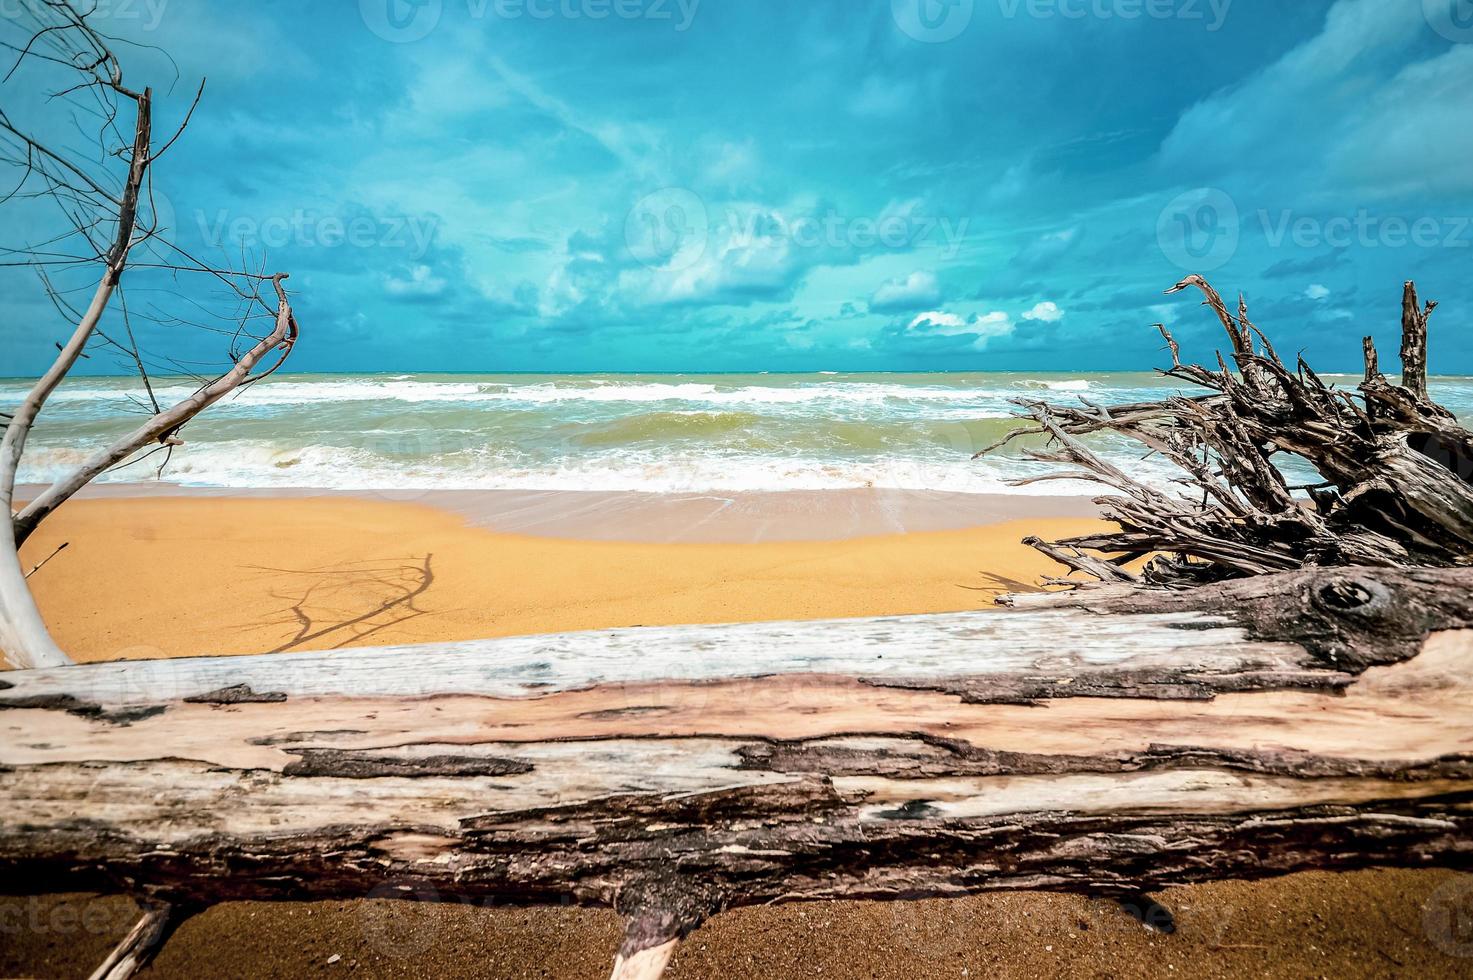 dead tree at beautiful beach photo